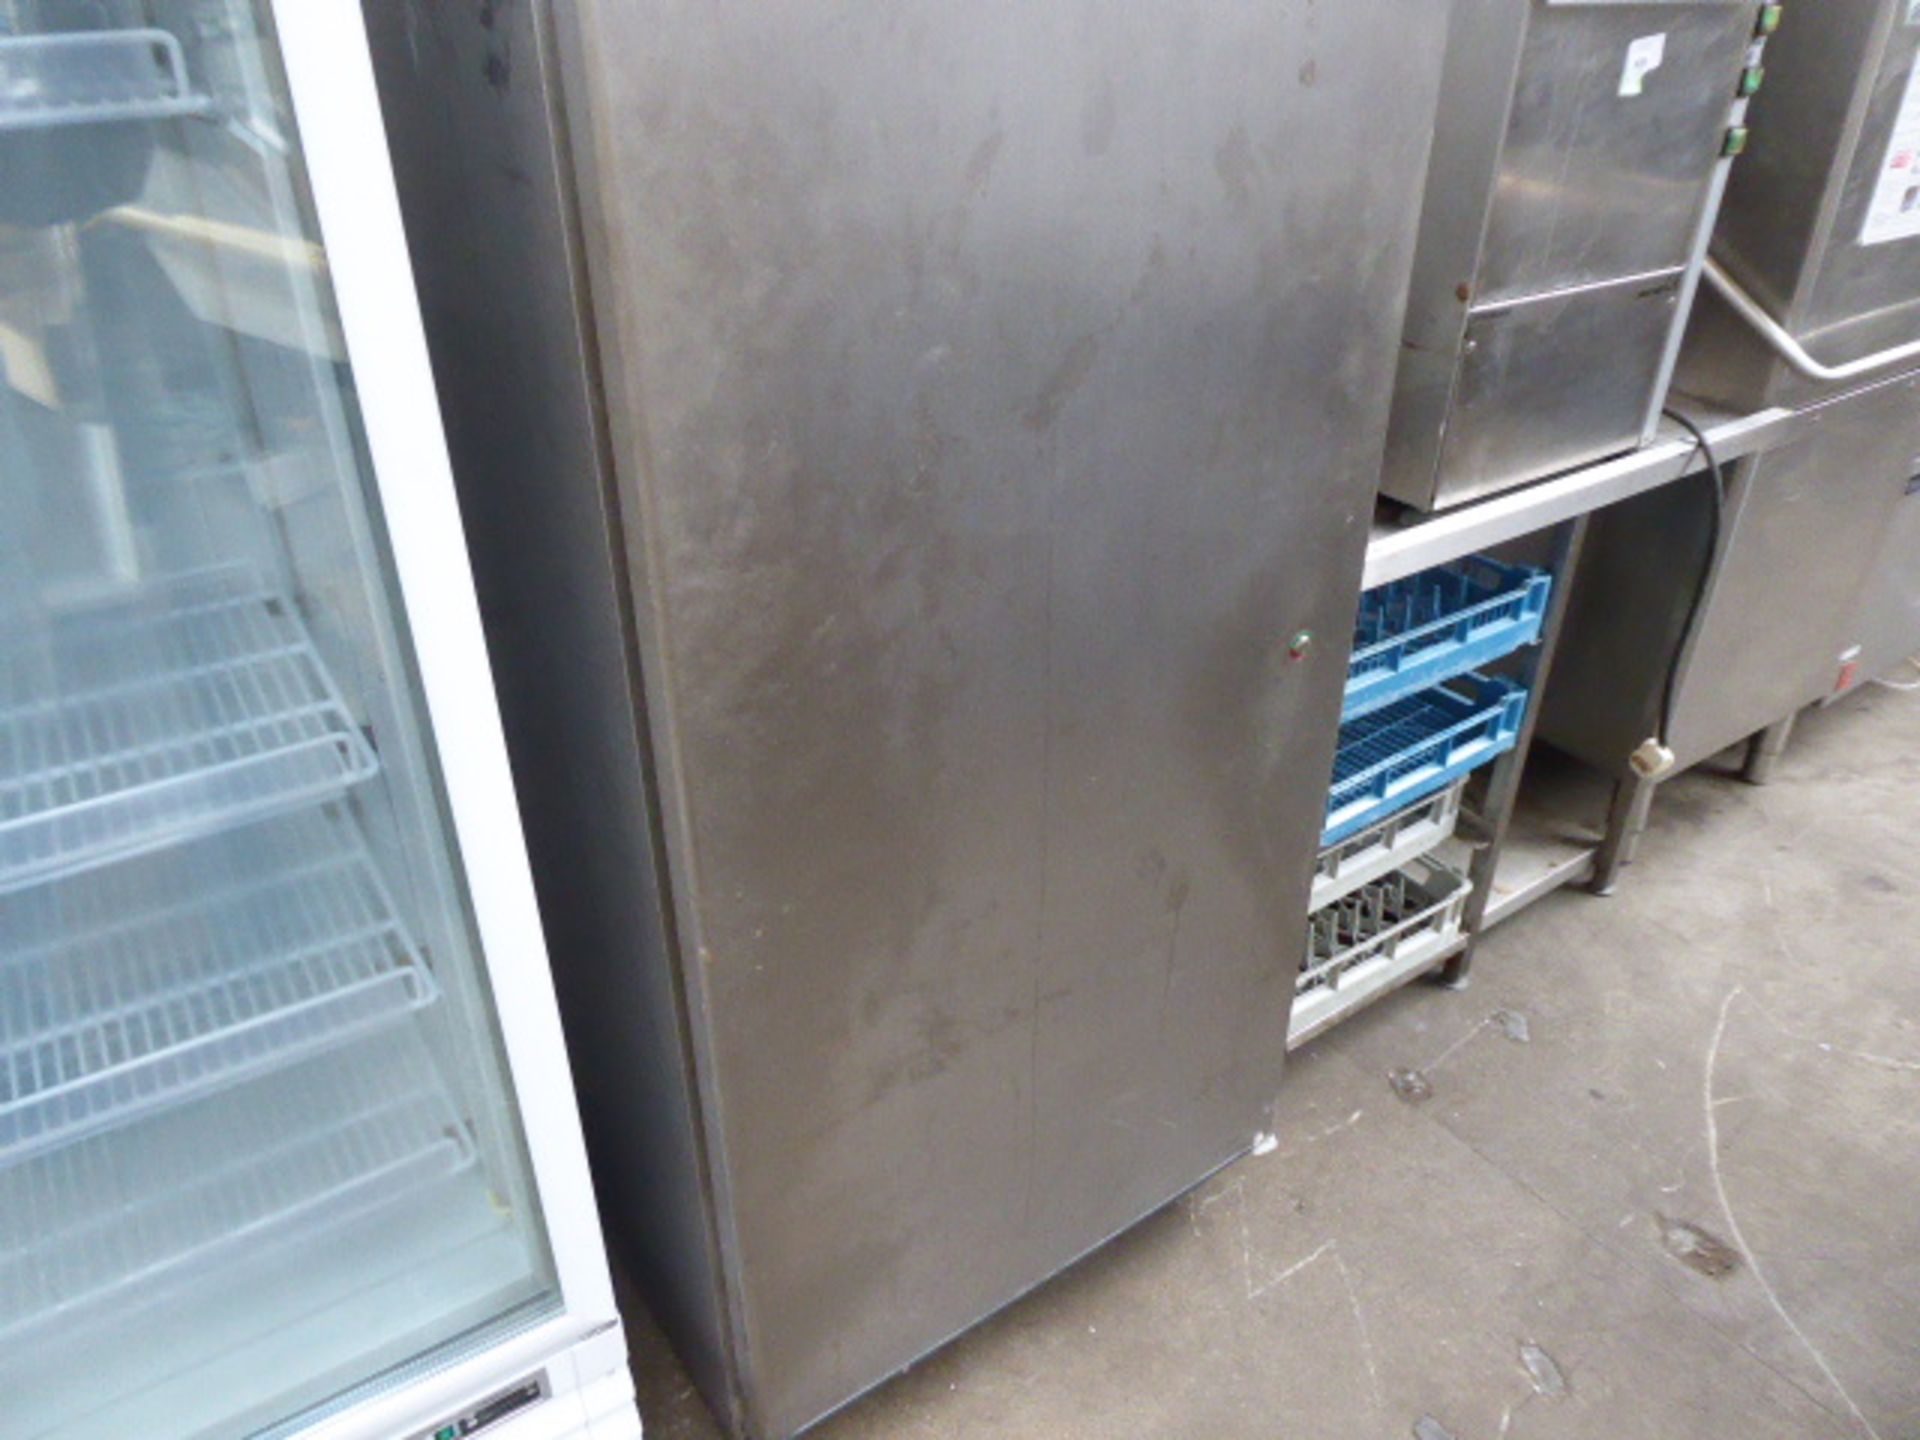 77cm Iarp model ABX500N single door freezer (failed test) - Image 2 of 3